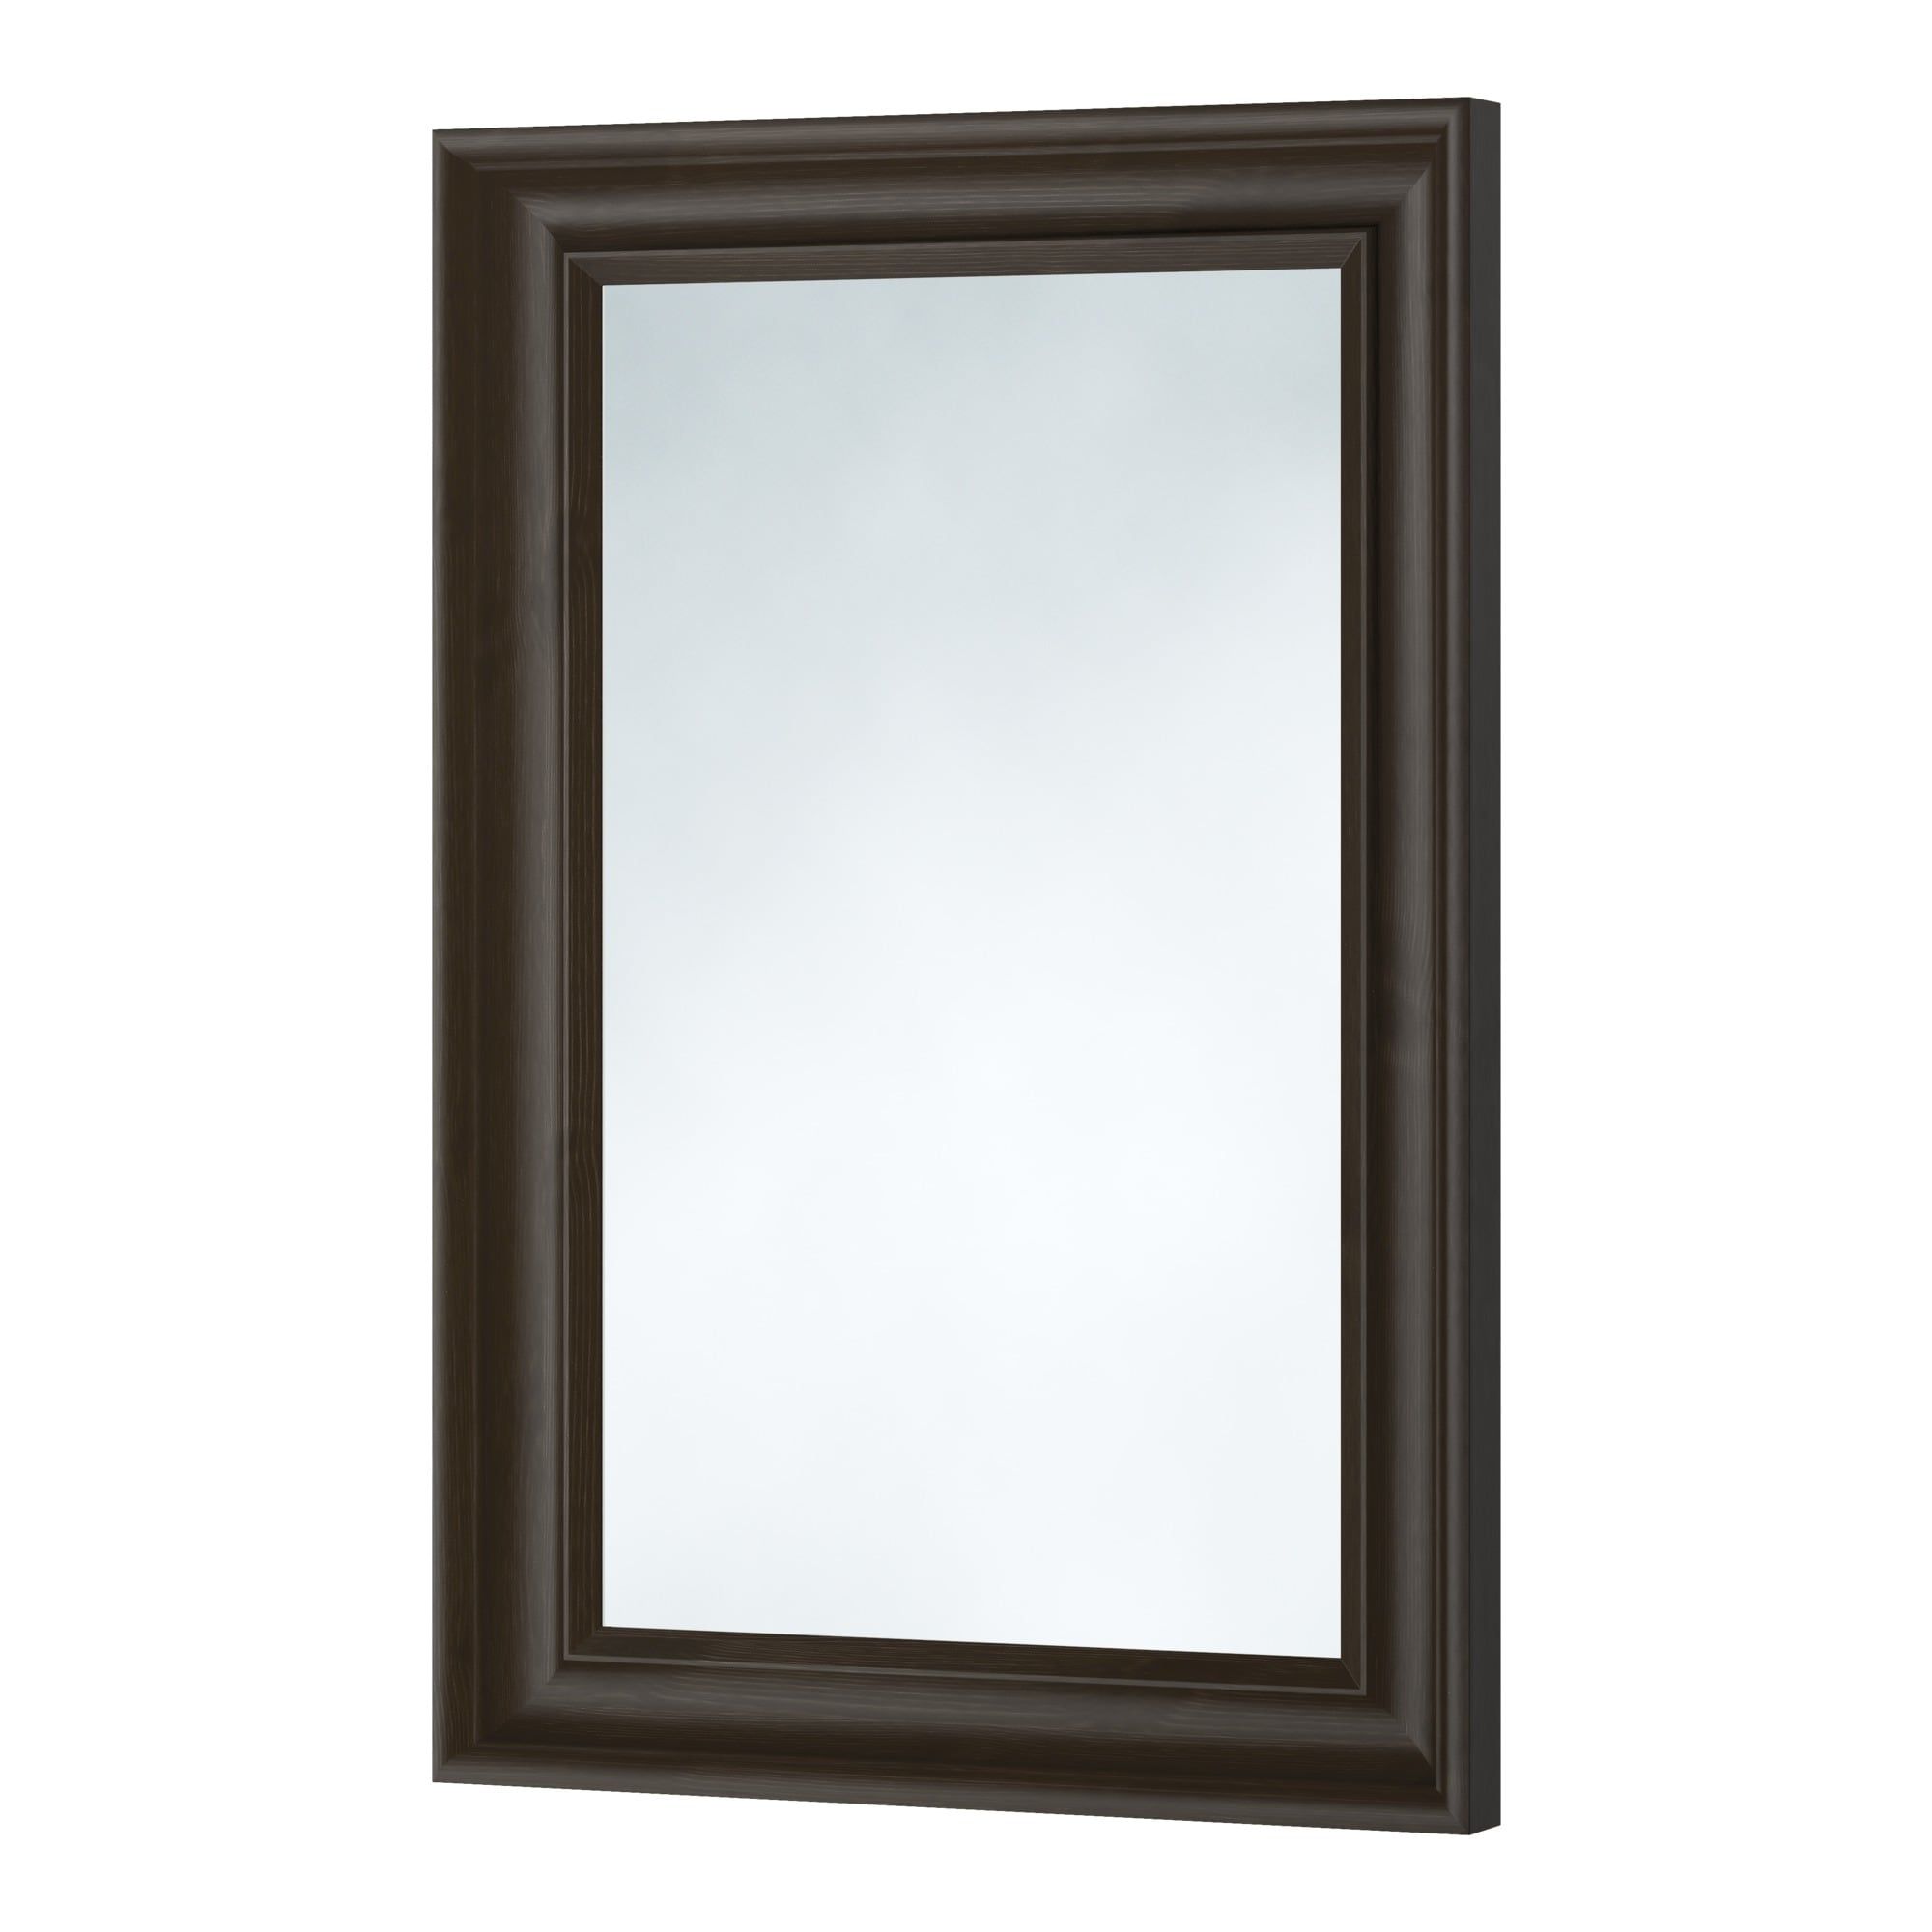 Hemnes Mirror, Black Brown | A Surrey Design Board | Ikea With Regard To Vassallo Beaded Bronze Beveled Wall Mirrors (View 12 of 20)